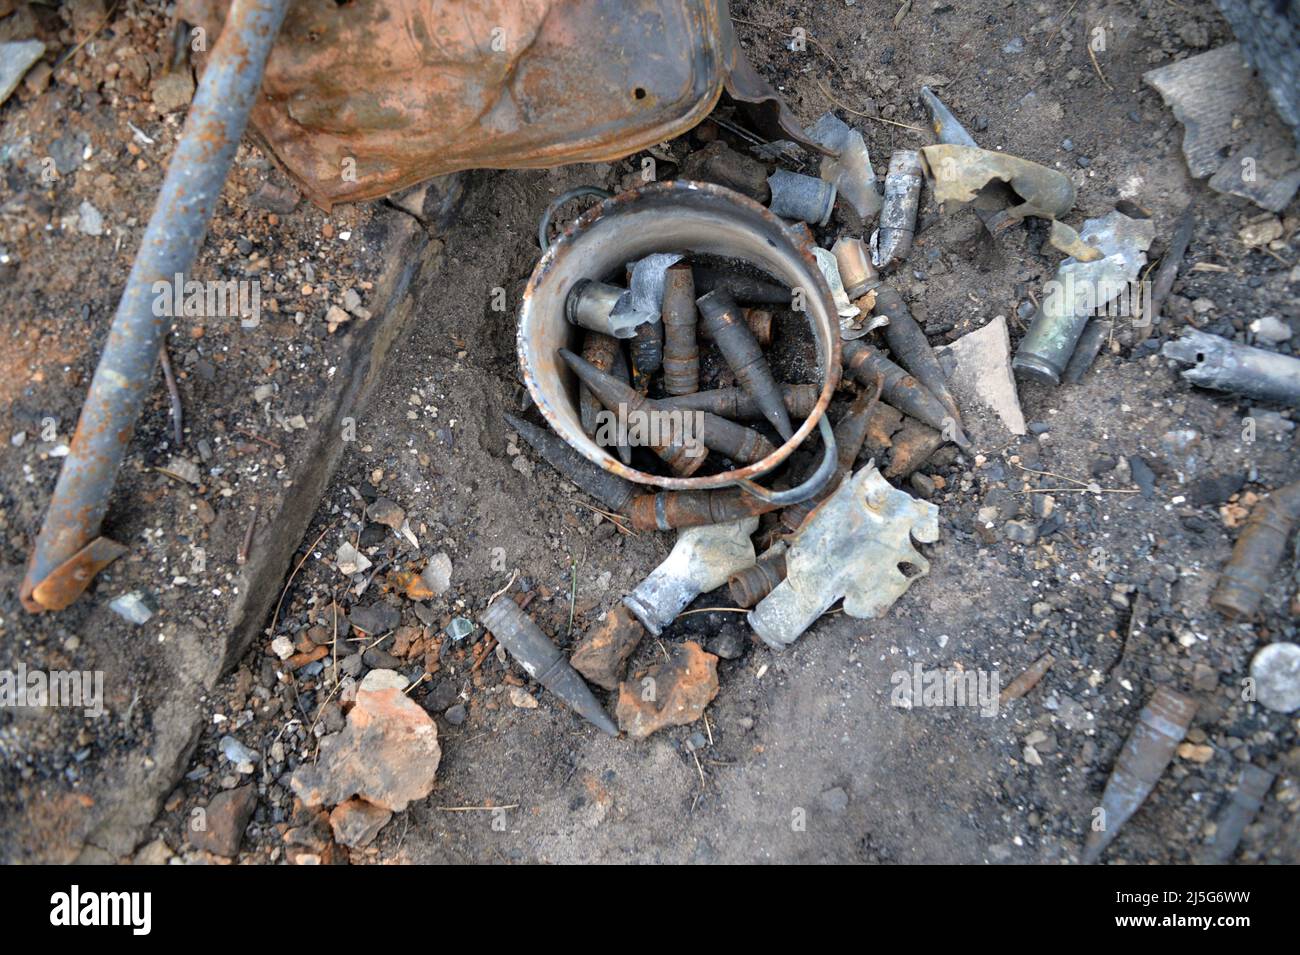 BERVYTSIA, UKRAINE - APRIL 21, 2022 - Ammunition found by Ukrainian forensic investigators lies on the ground in the village of Bervytsia liberated fr Stock Photo